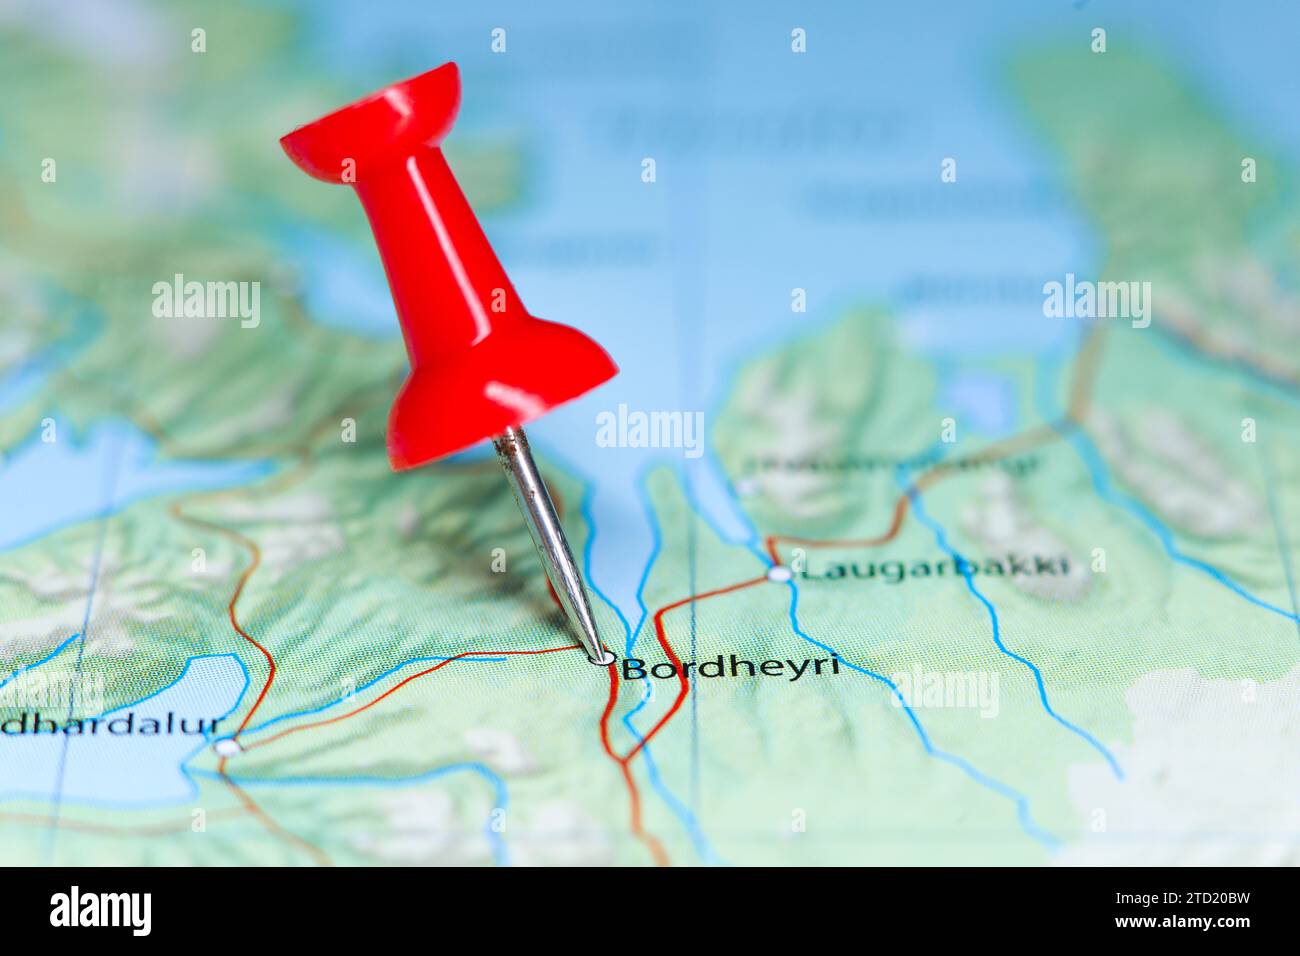 Bordheyri, Iceland pin on map Stock Photo